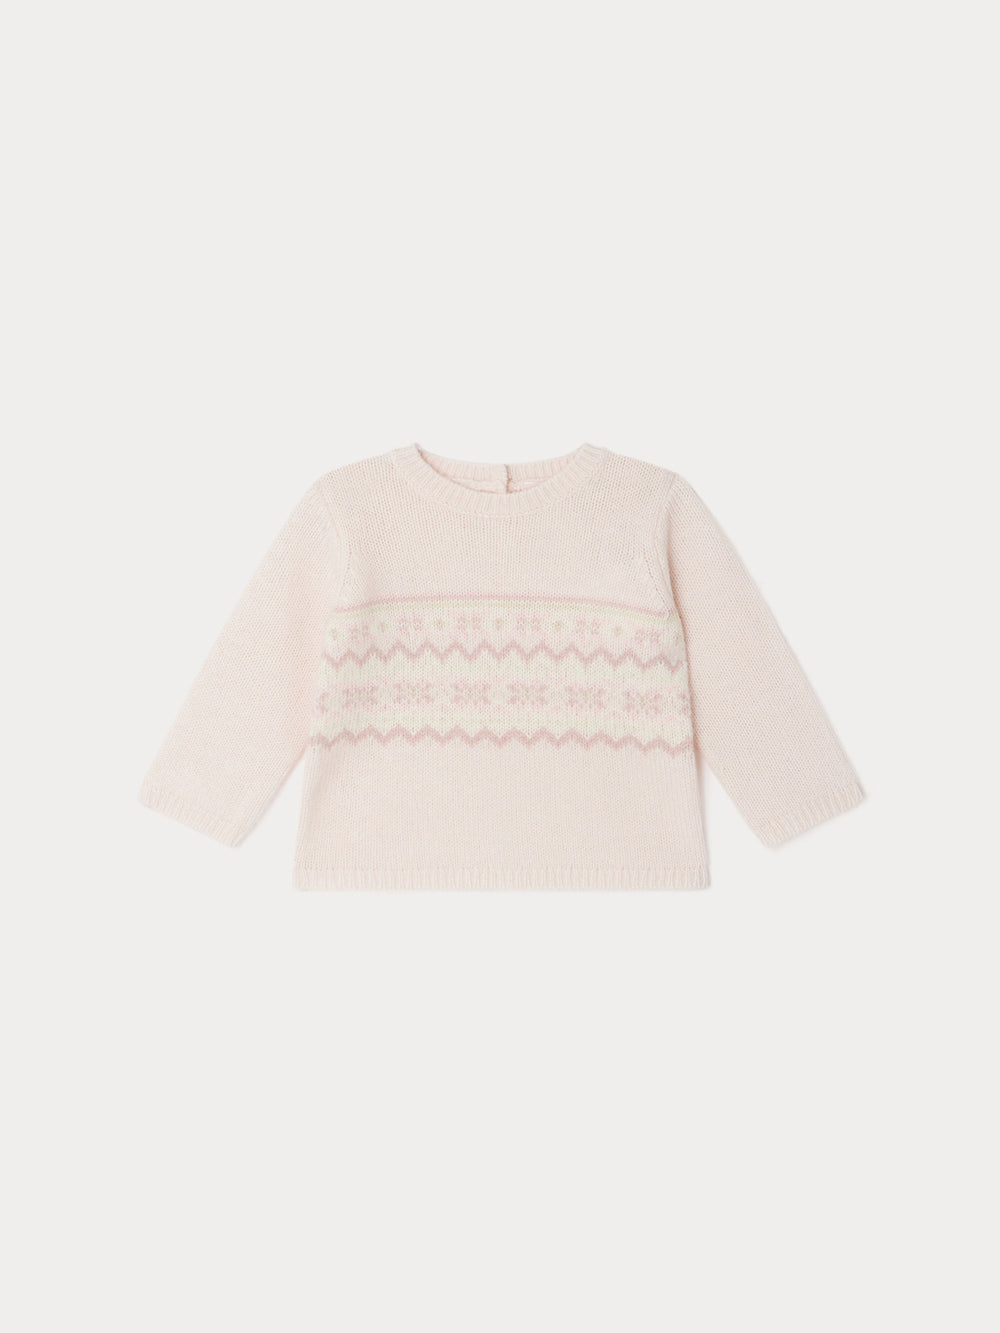 Thiane Sweater multicolor pink